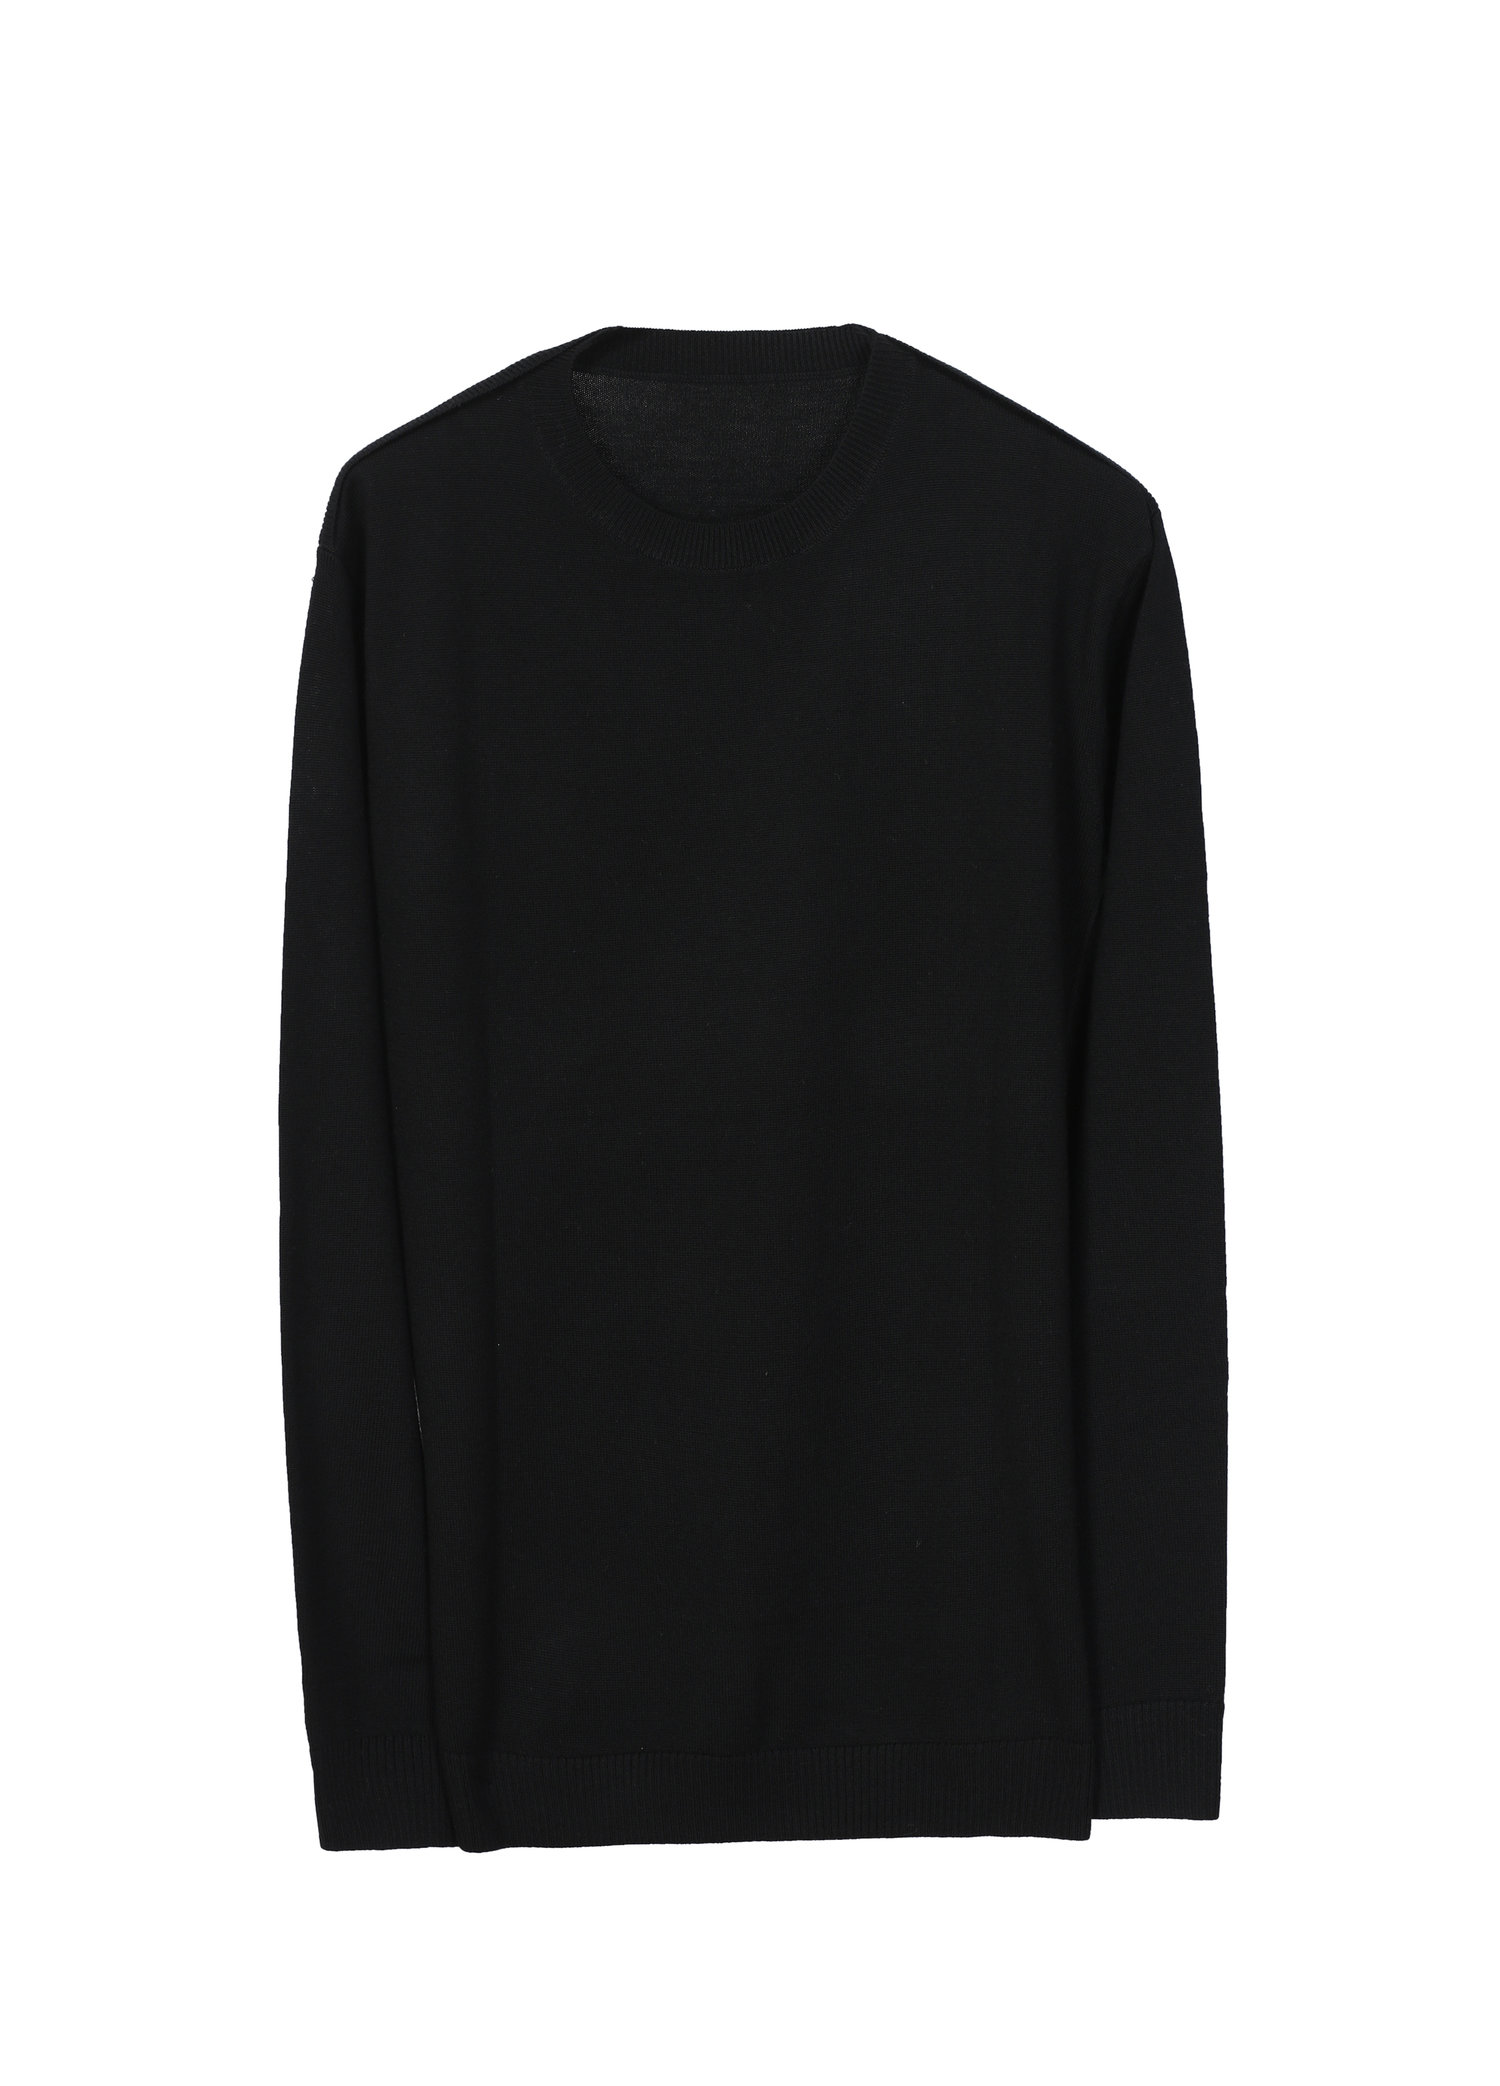 YUNY Mens Soft Classic-Fit Fitness Fall Knitwear Contrast Sweater Top Dark Grey XS 